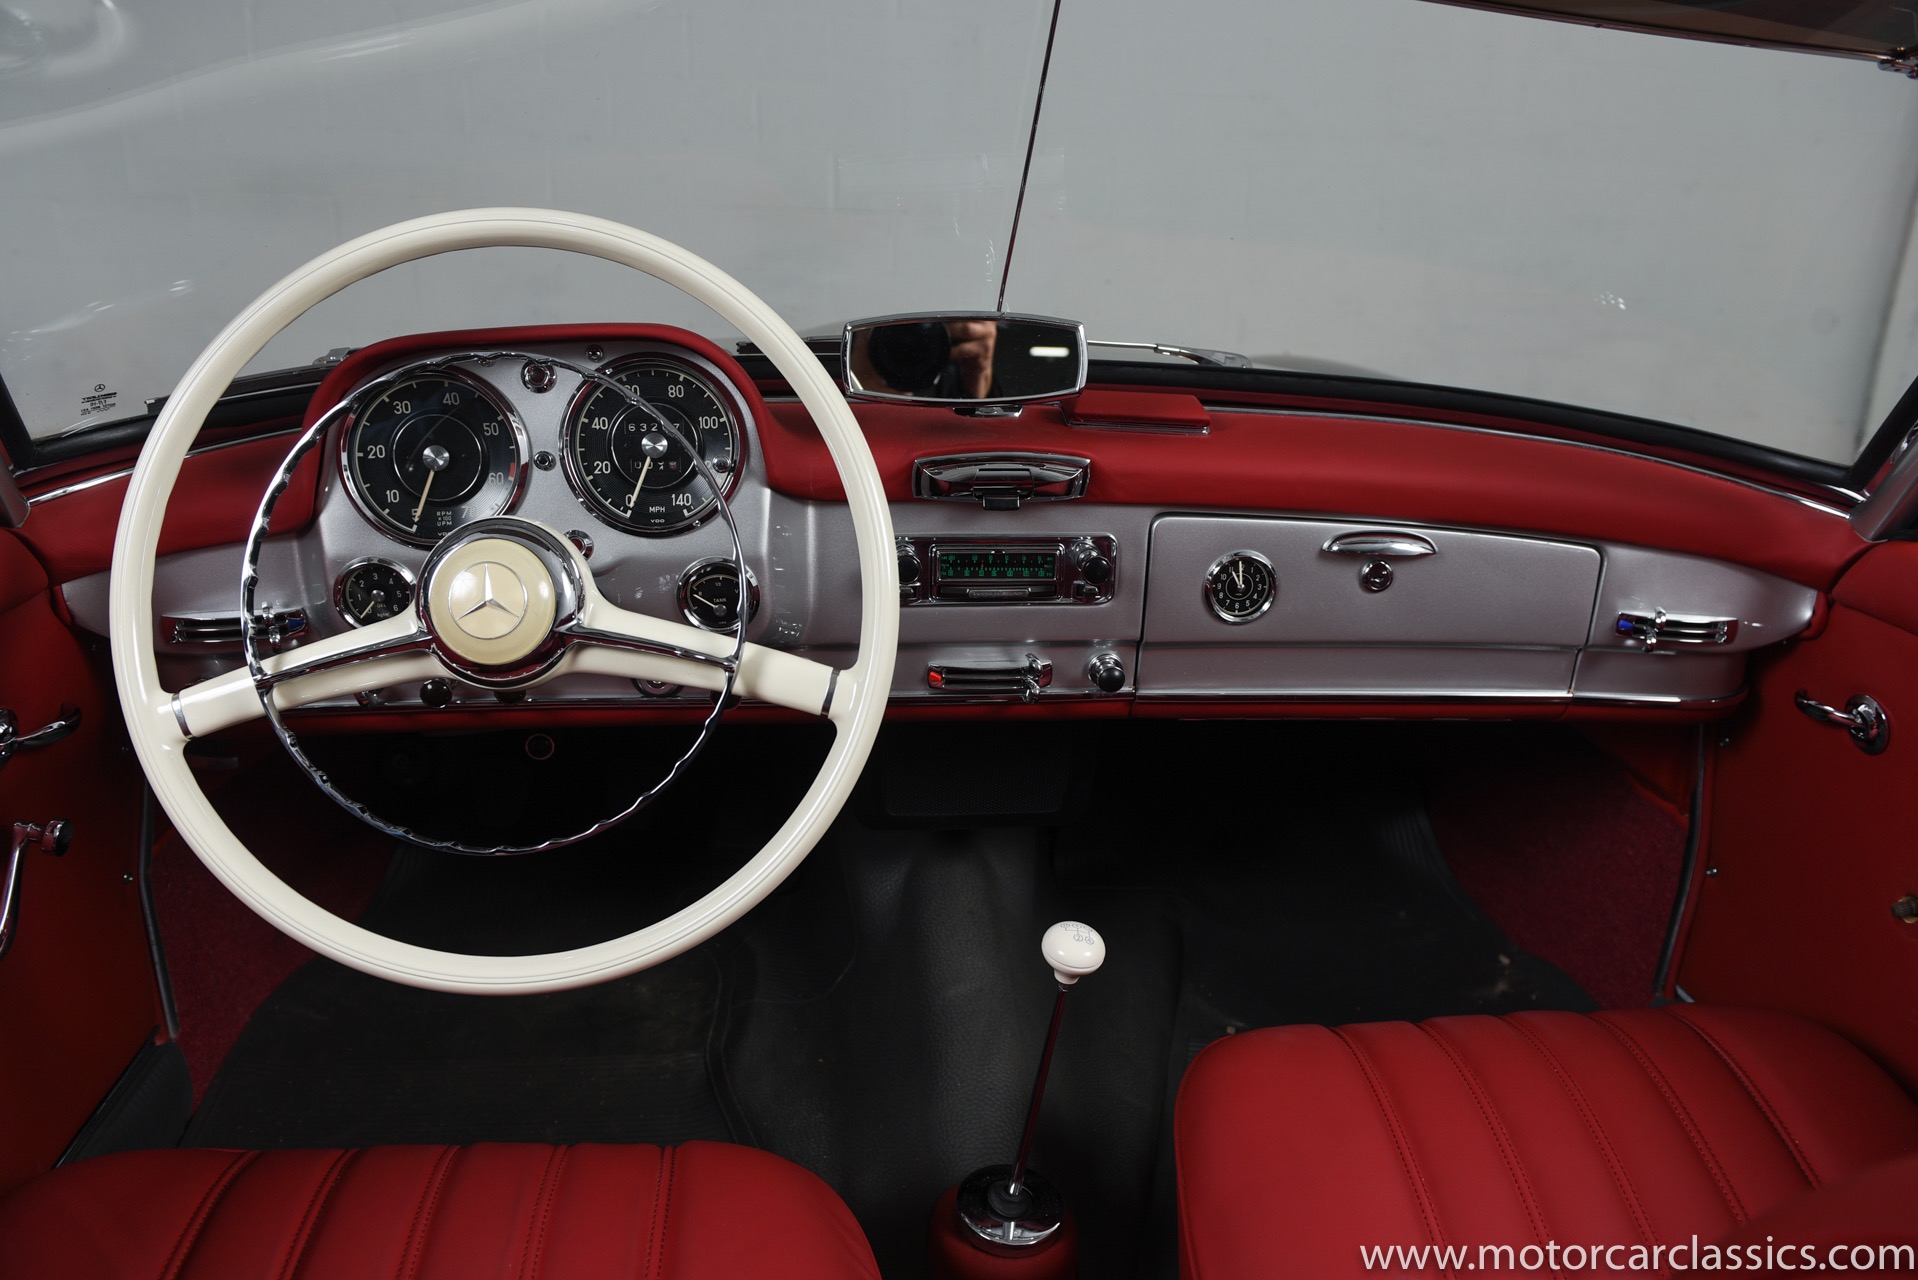 Used 1959 Mercedes-Benz SL-Class 190SL For Sale ($194,900) | Motorcar Classics Stock #1399